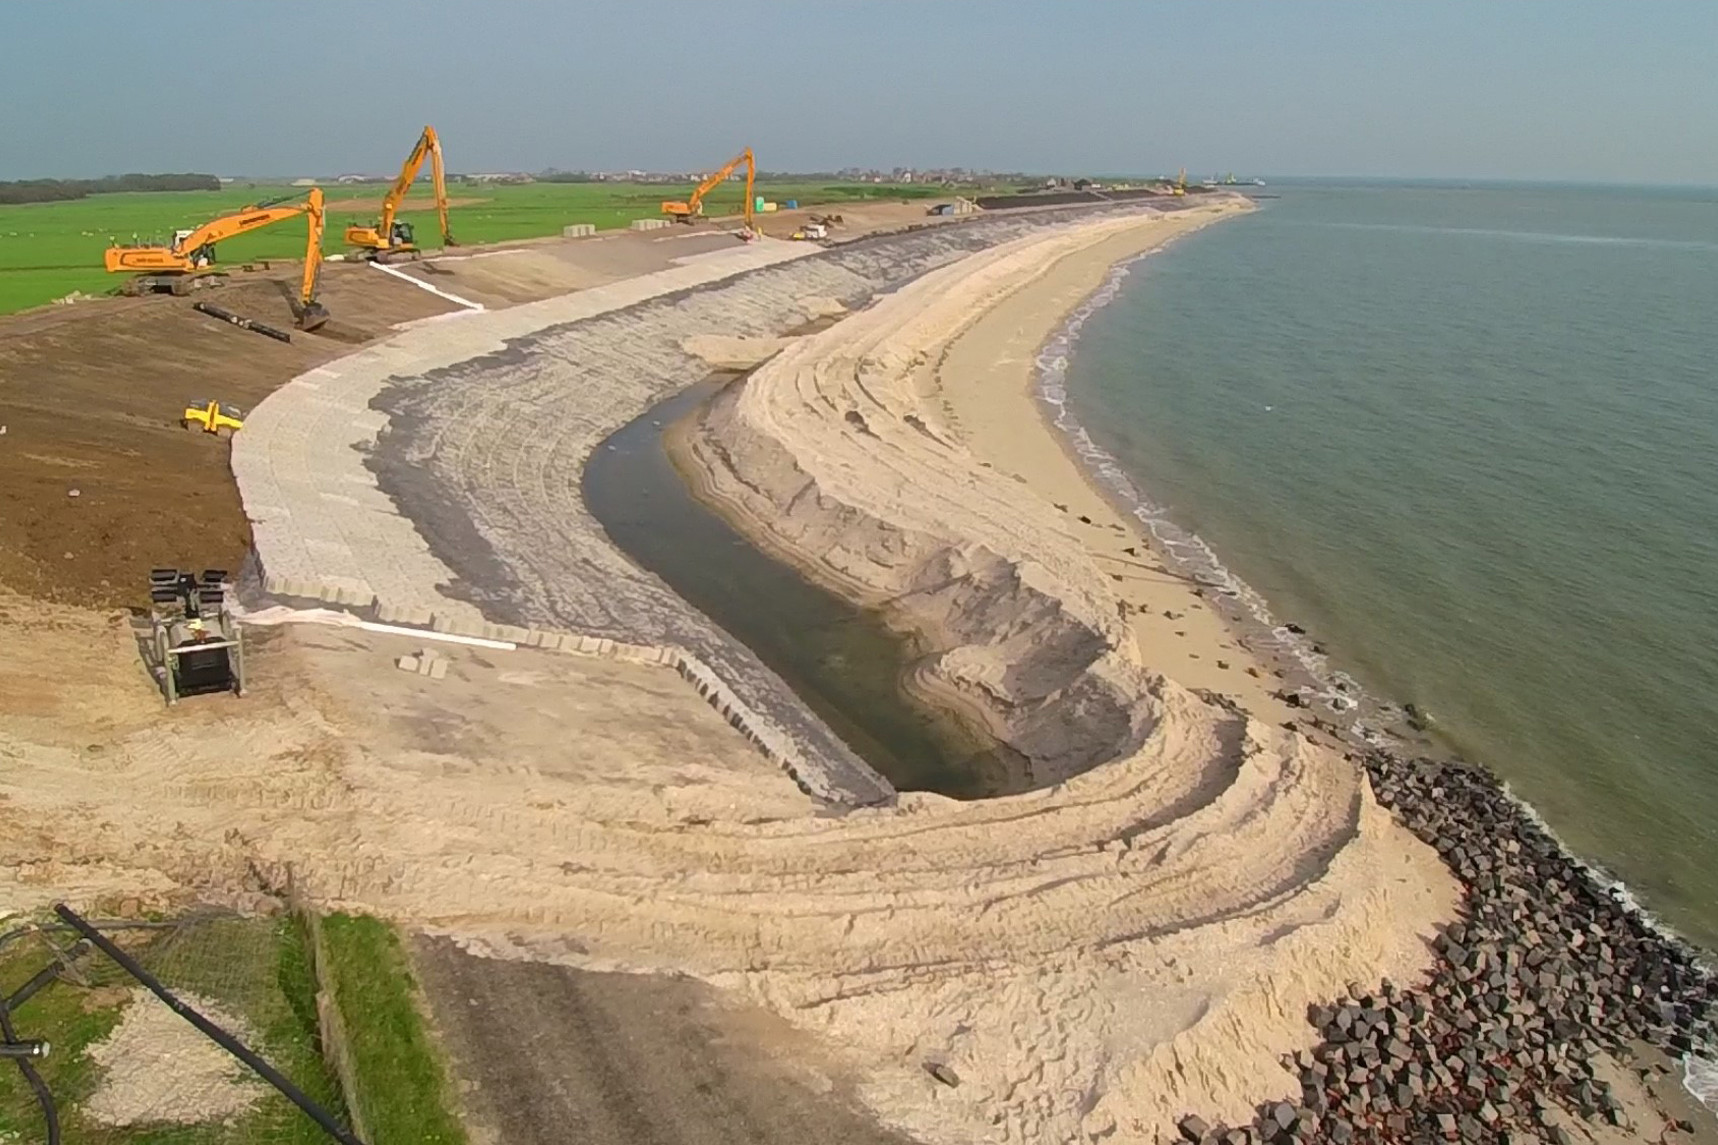 Dike upgrade activities on the island of Texel